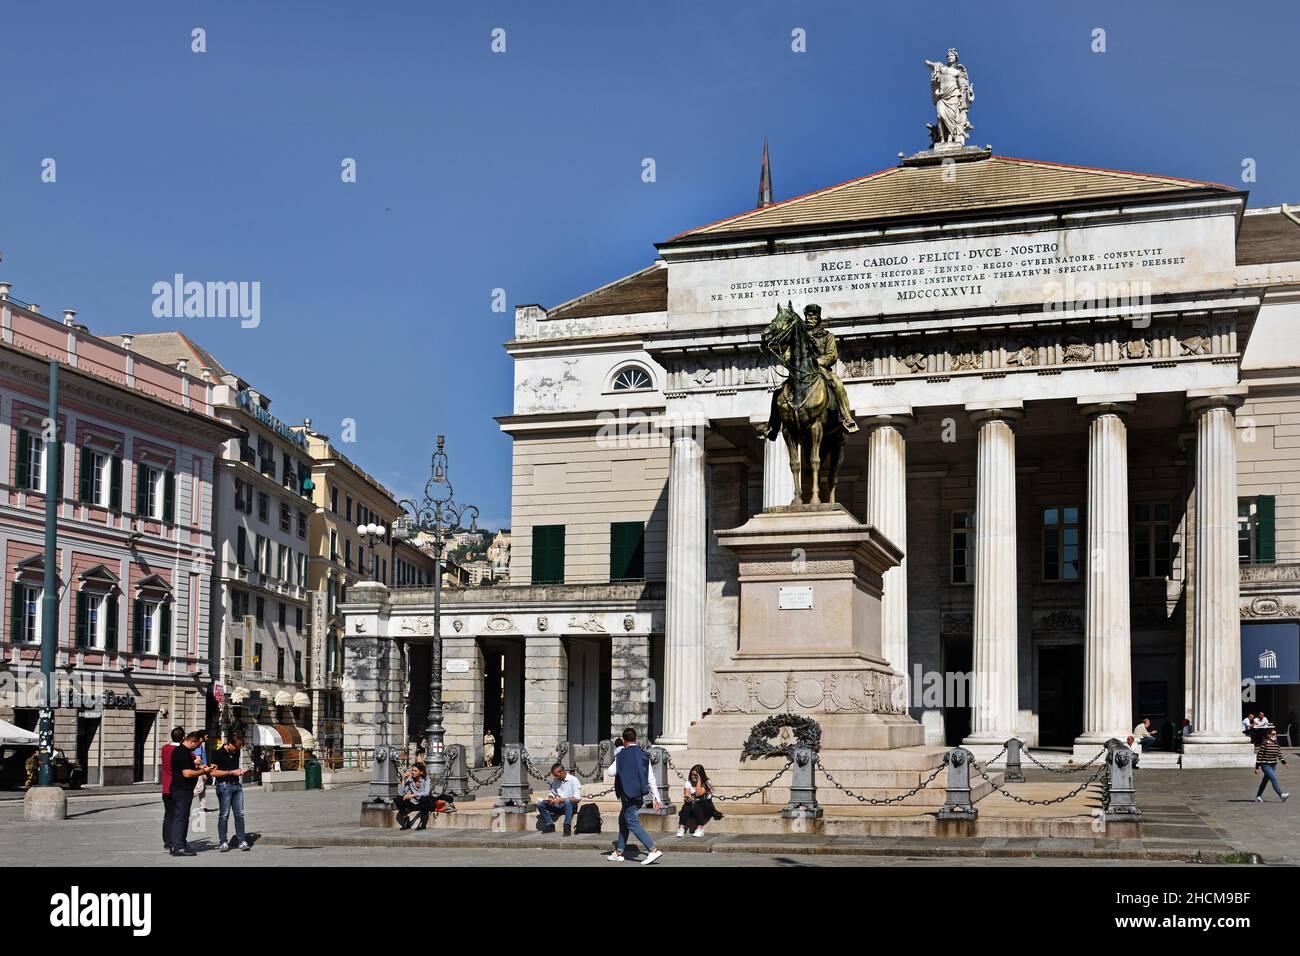 Equestrian statue of Guiseppe Garibaldi in front of the Teatro Carol Felice on Piazza De Ferrari, Genoa, Italy  Genoa, Genova, Italy, Italian. Stock Photo